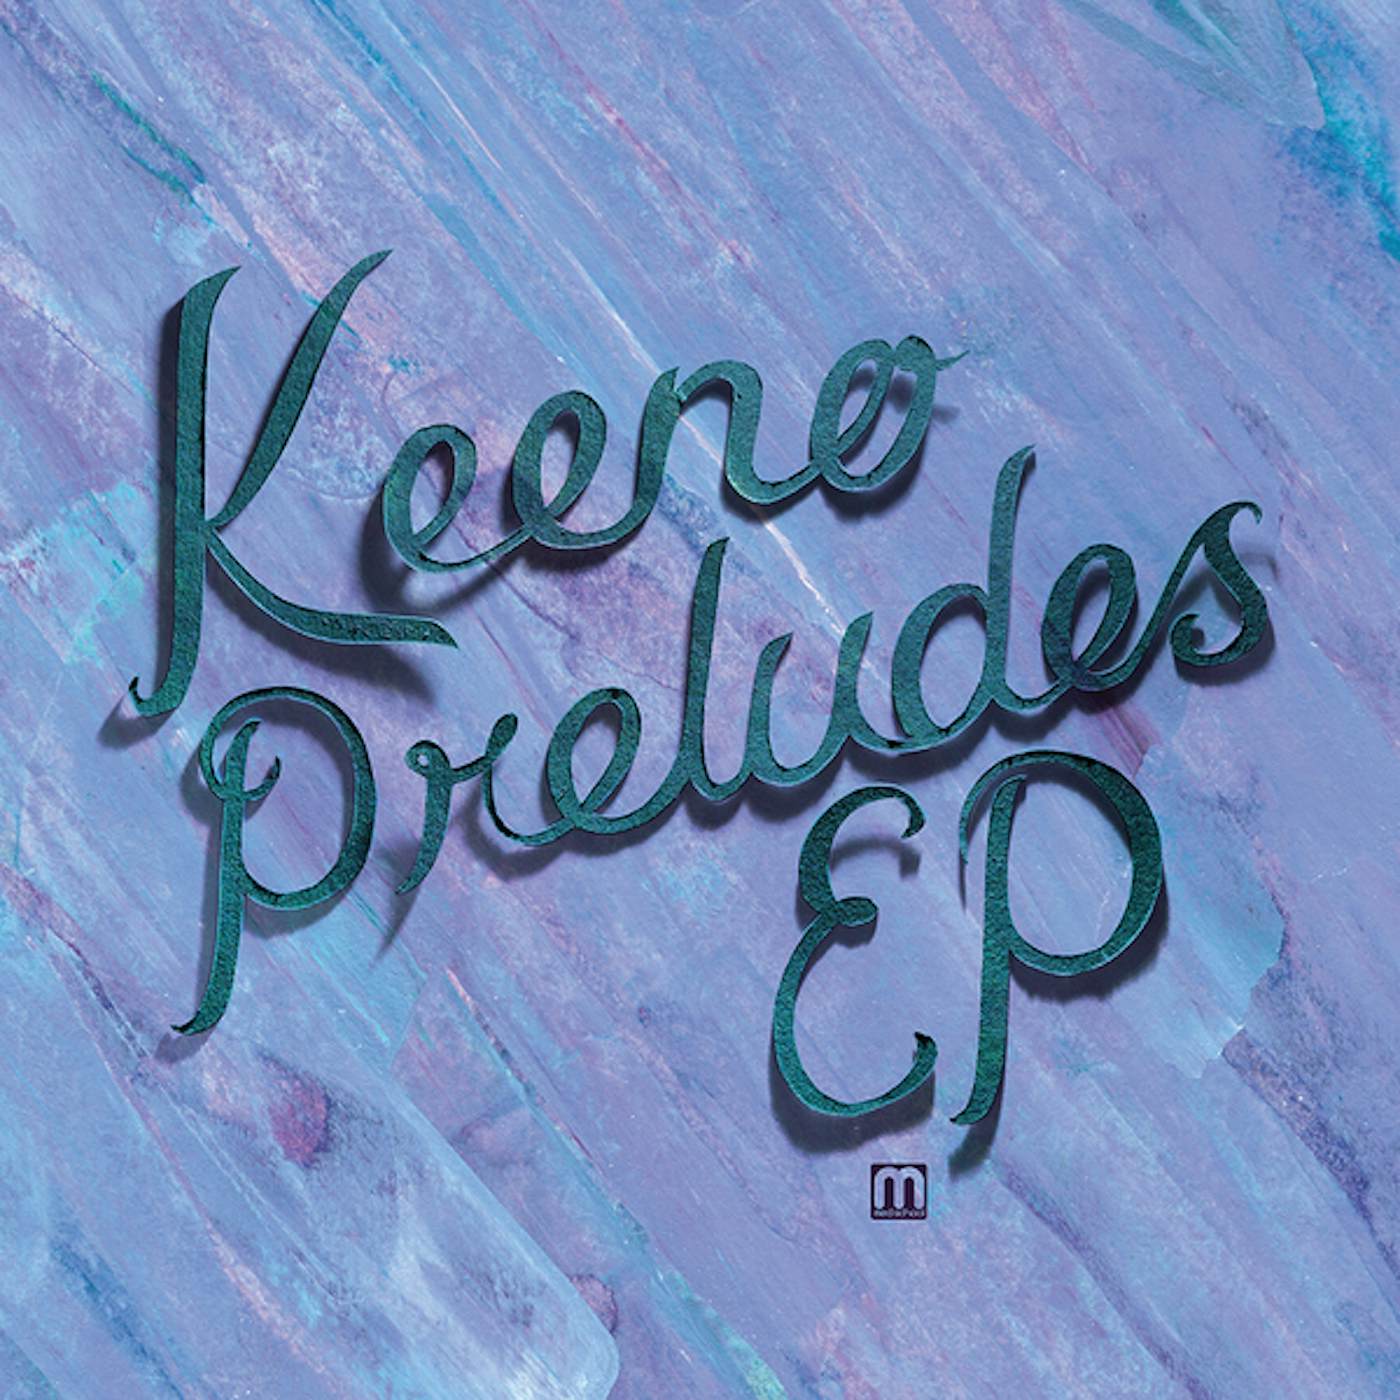 Keeno Preludes EP (Vinyl)